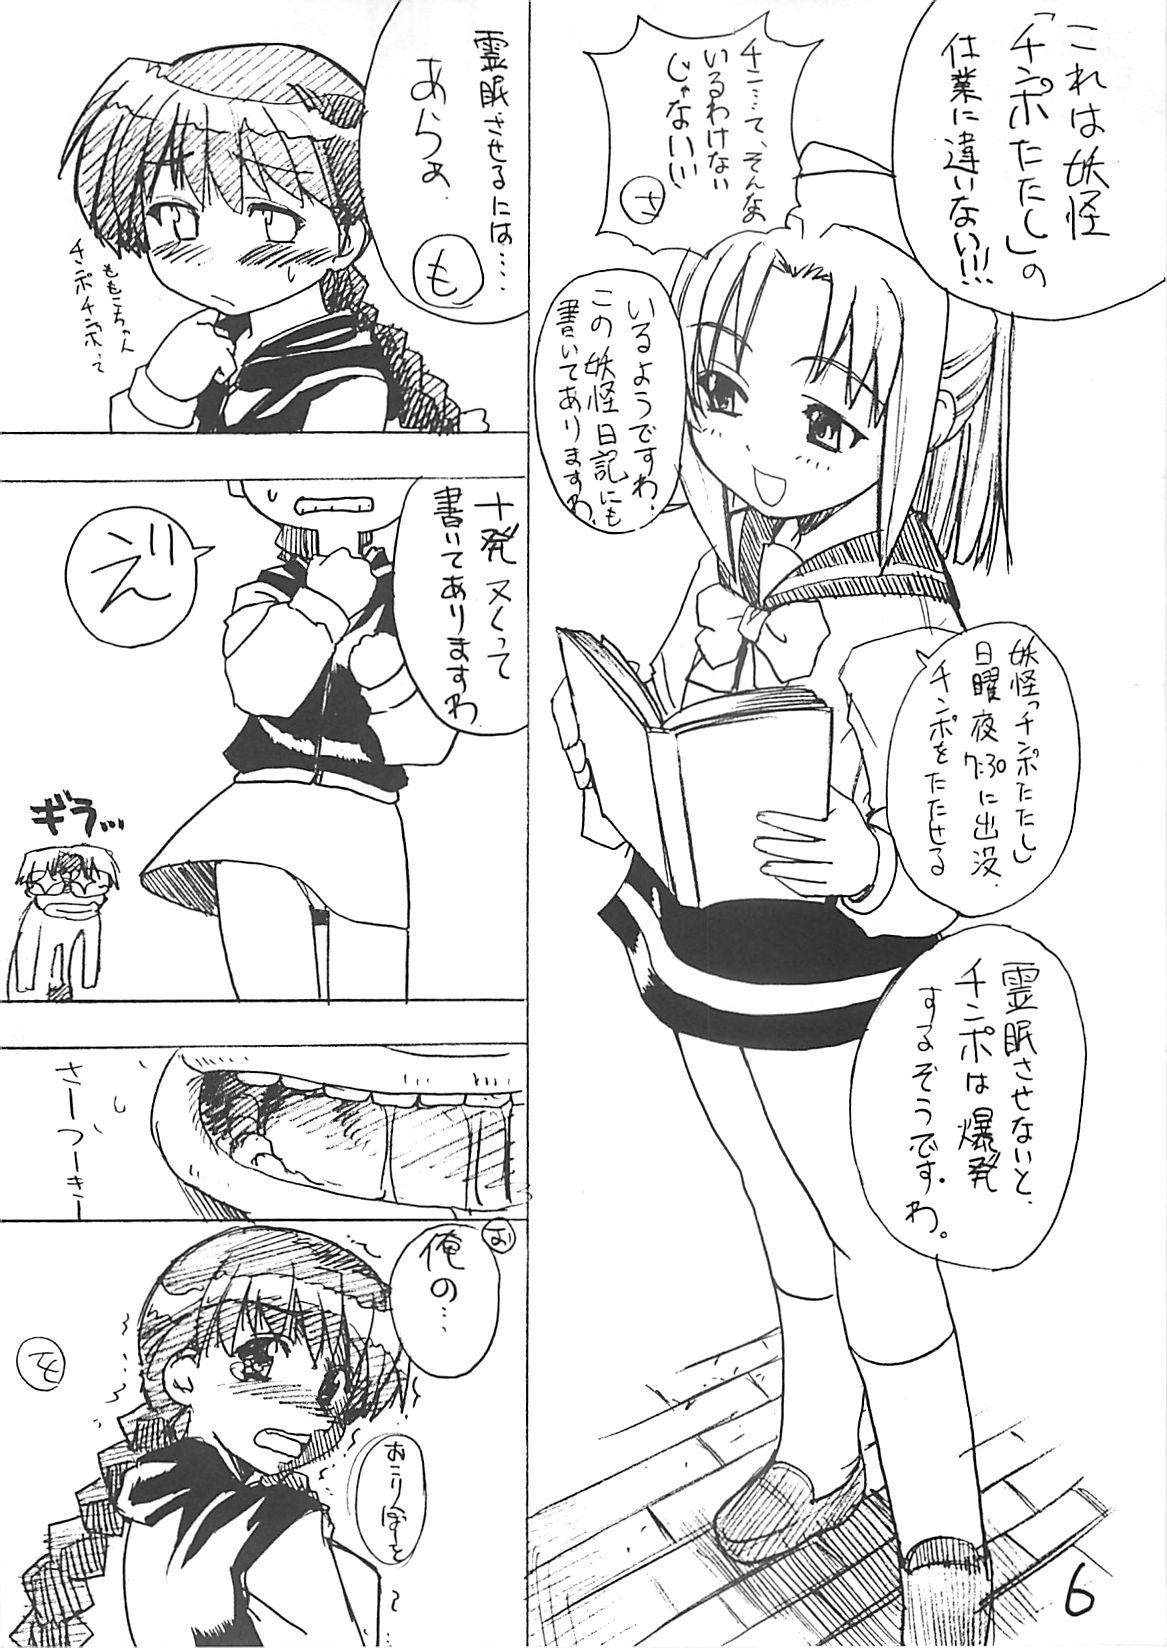 Women Sucking Dick Takehara Style - Gakkou no kaidan Vintage - Page 5